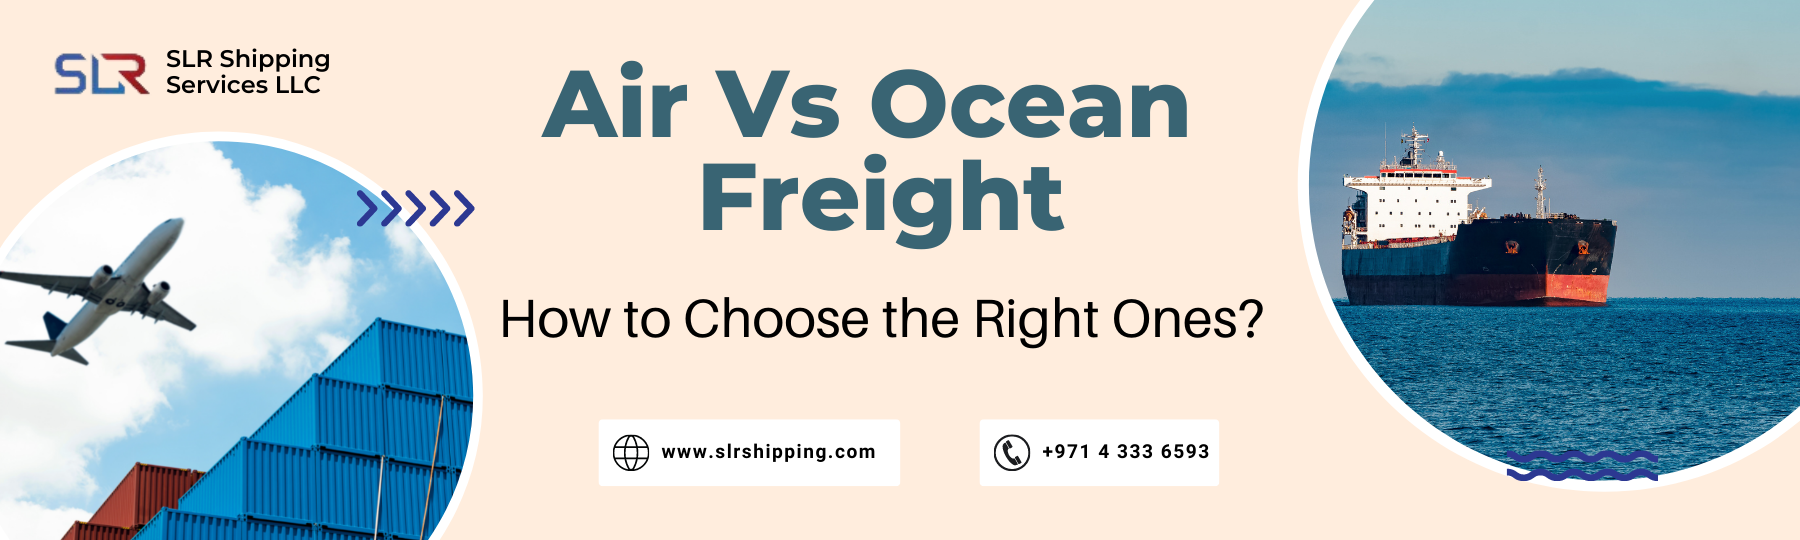 Top Reasons to Choose Between Air and Ocean Freight